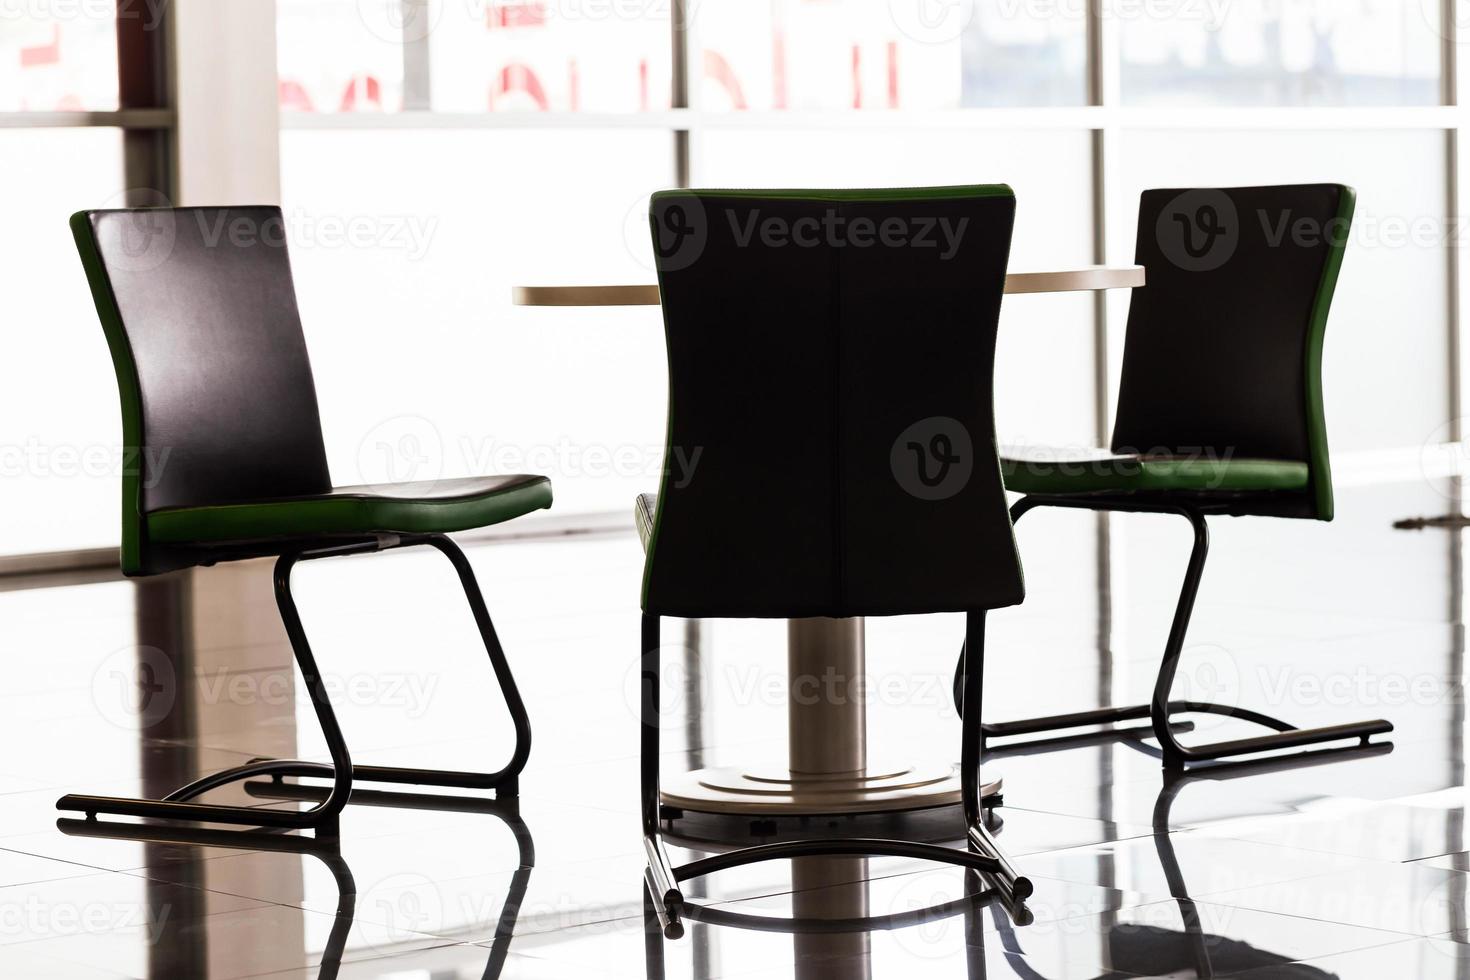 bakgrundsbelyst koncept av stolar och bord på kontoret foto